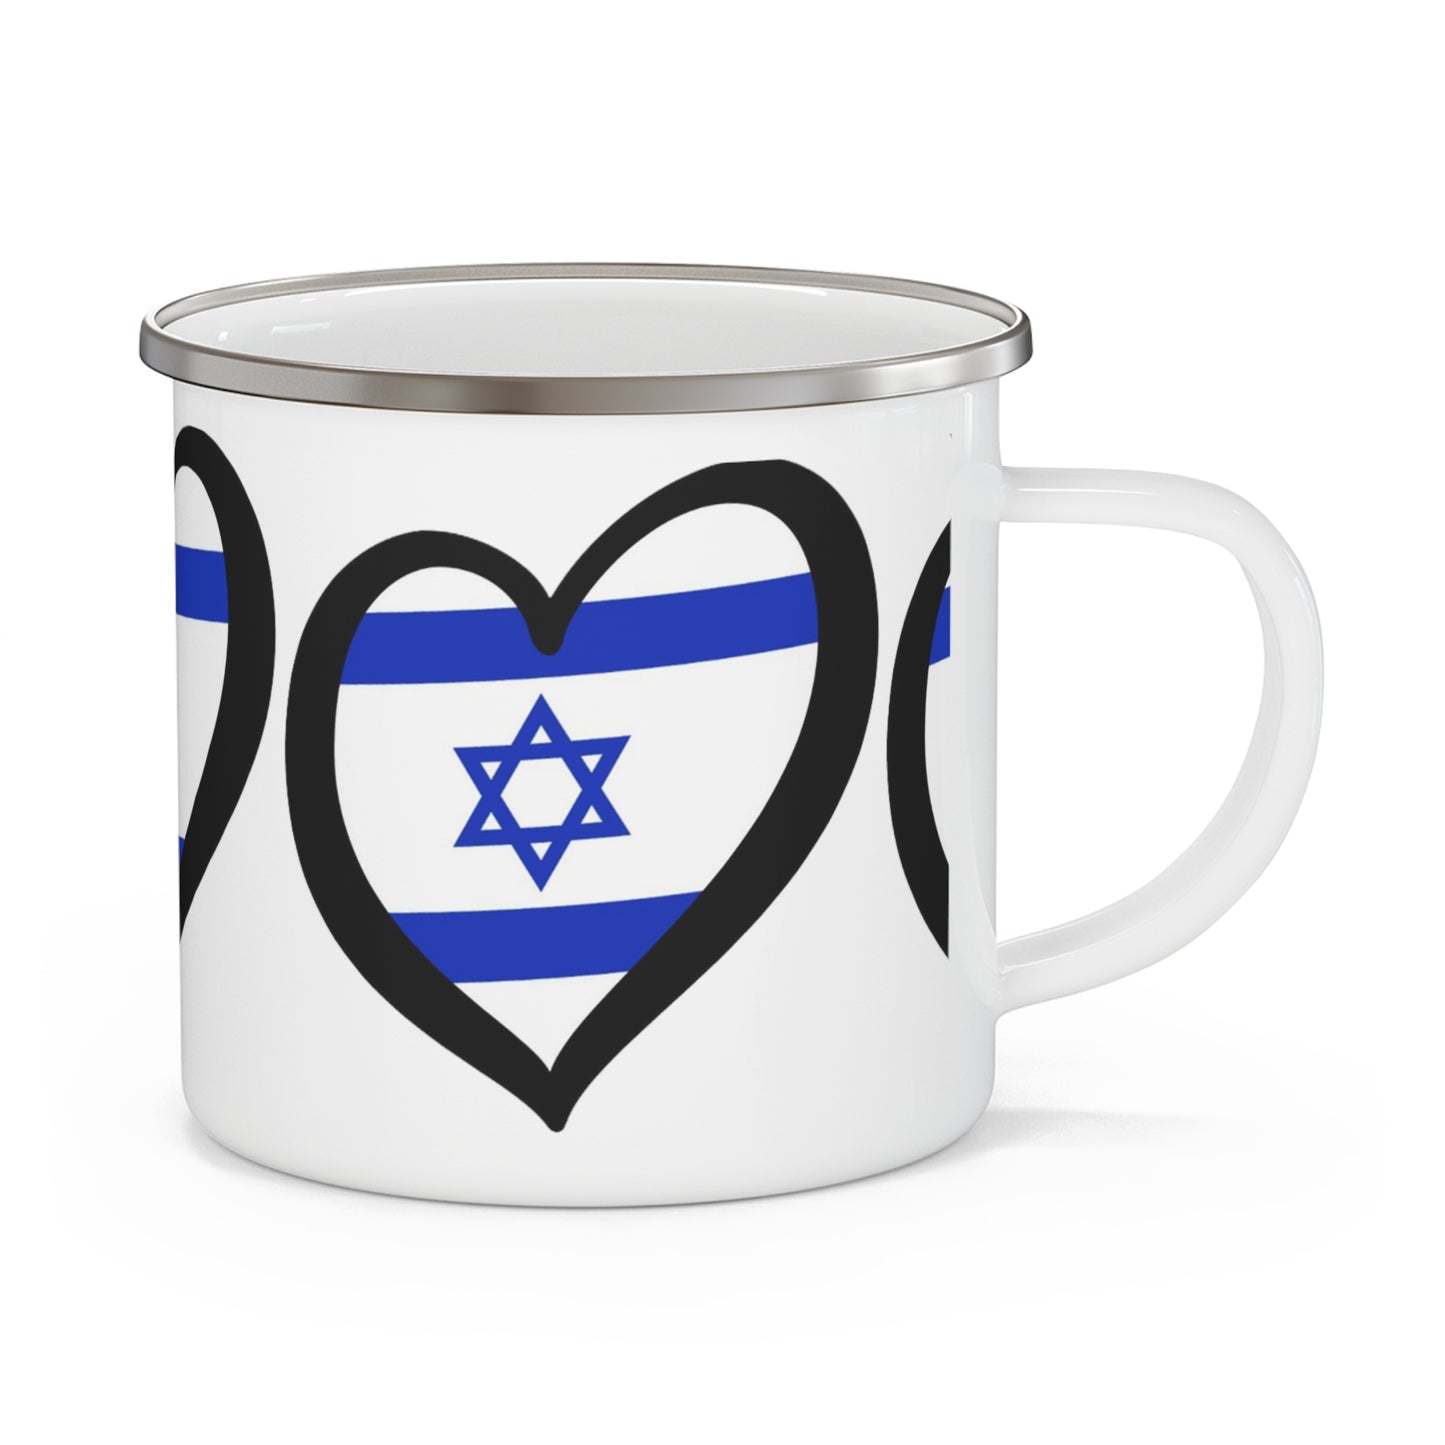 I Love Israel Ceramic Camping Mug